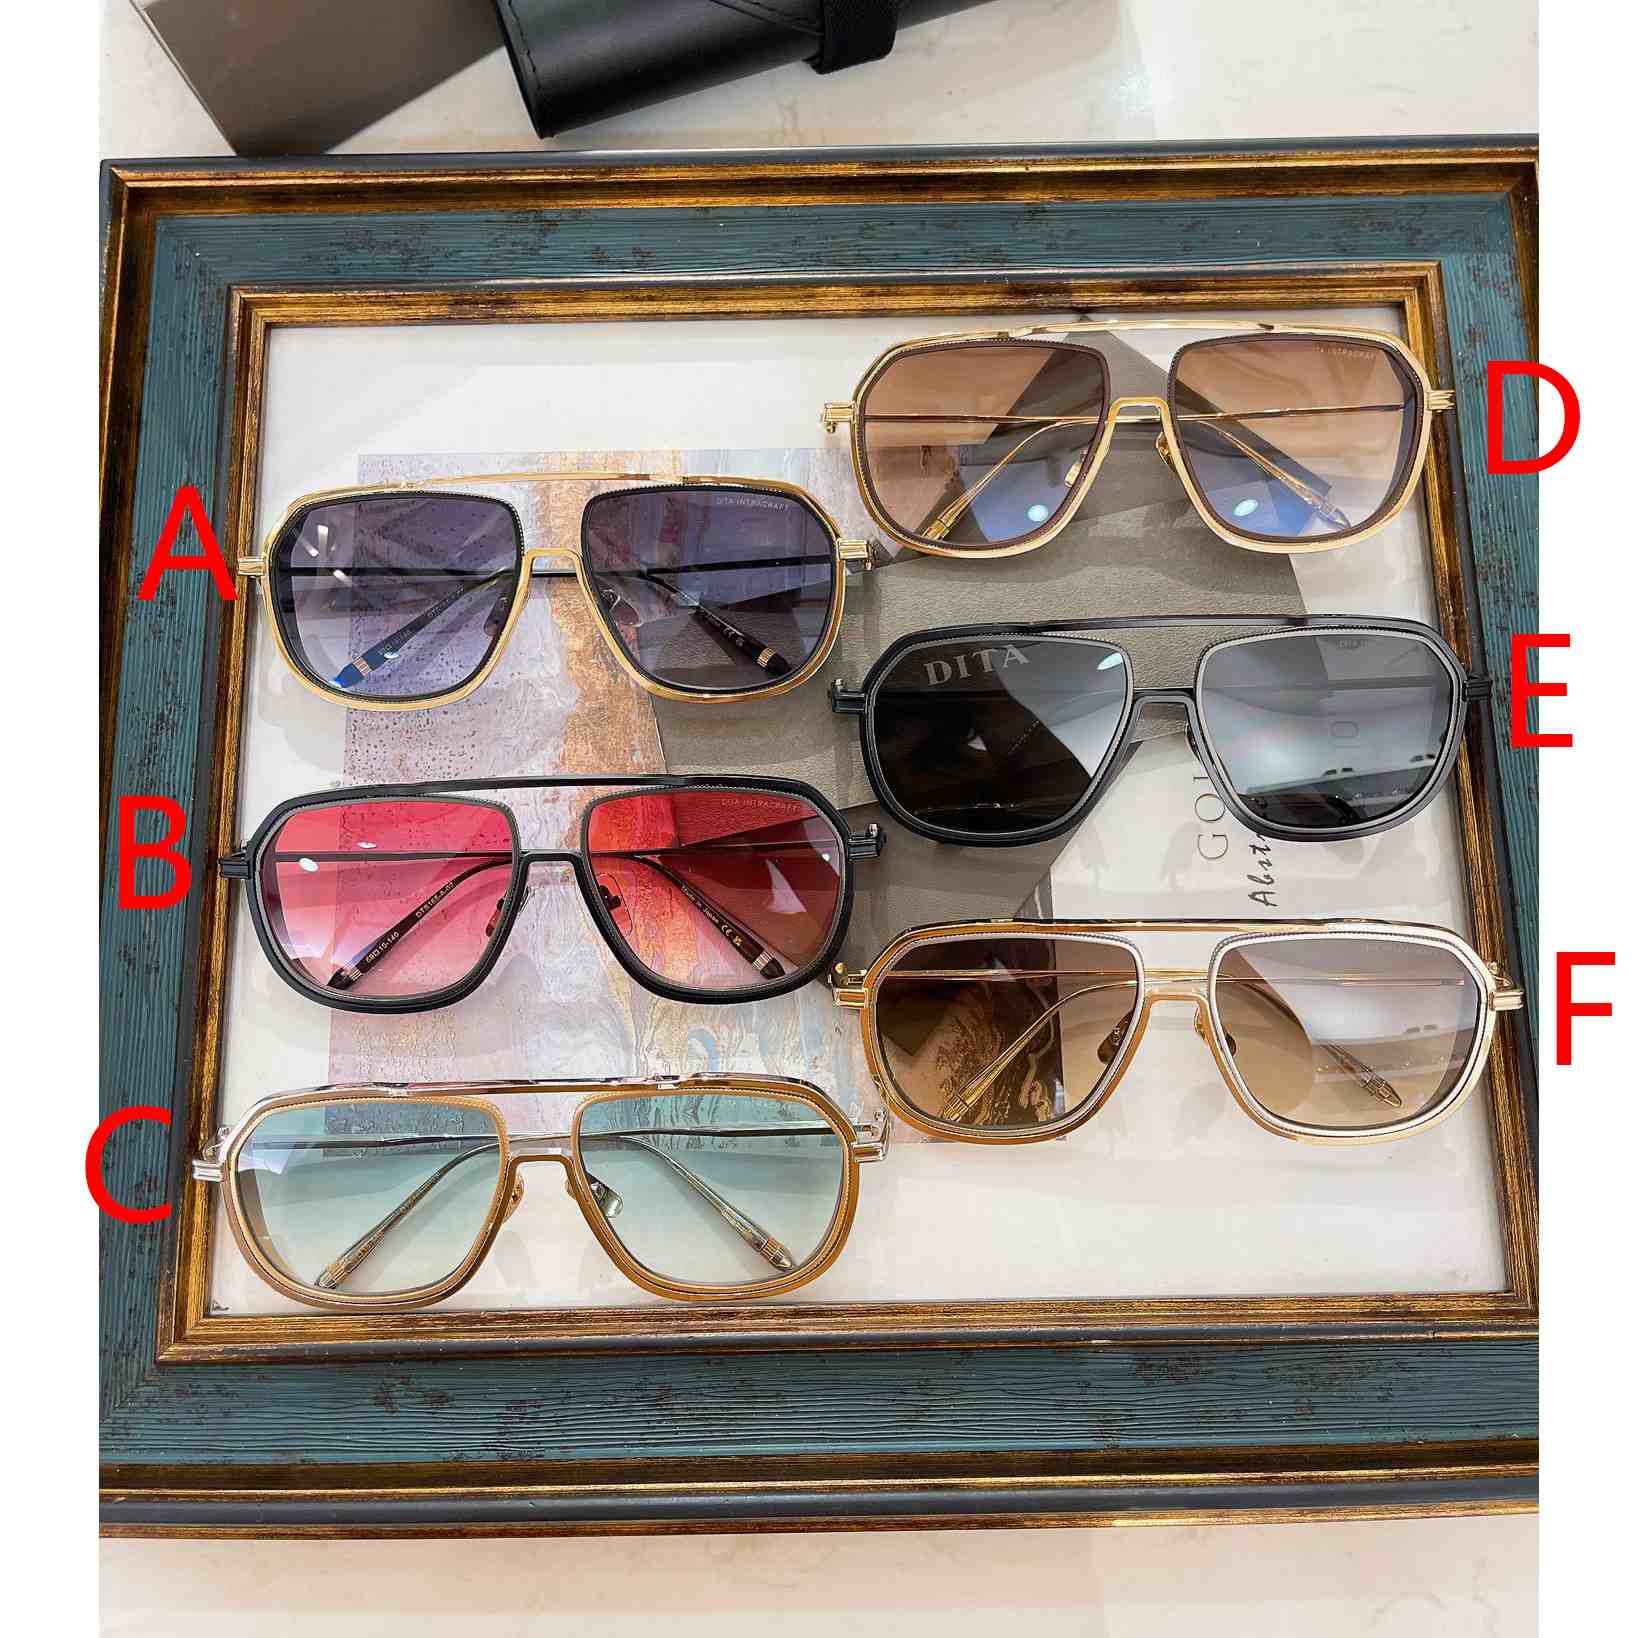 Dita DTS165 Sunglasses - everydesigner